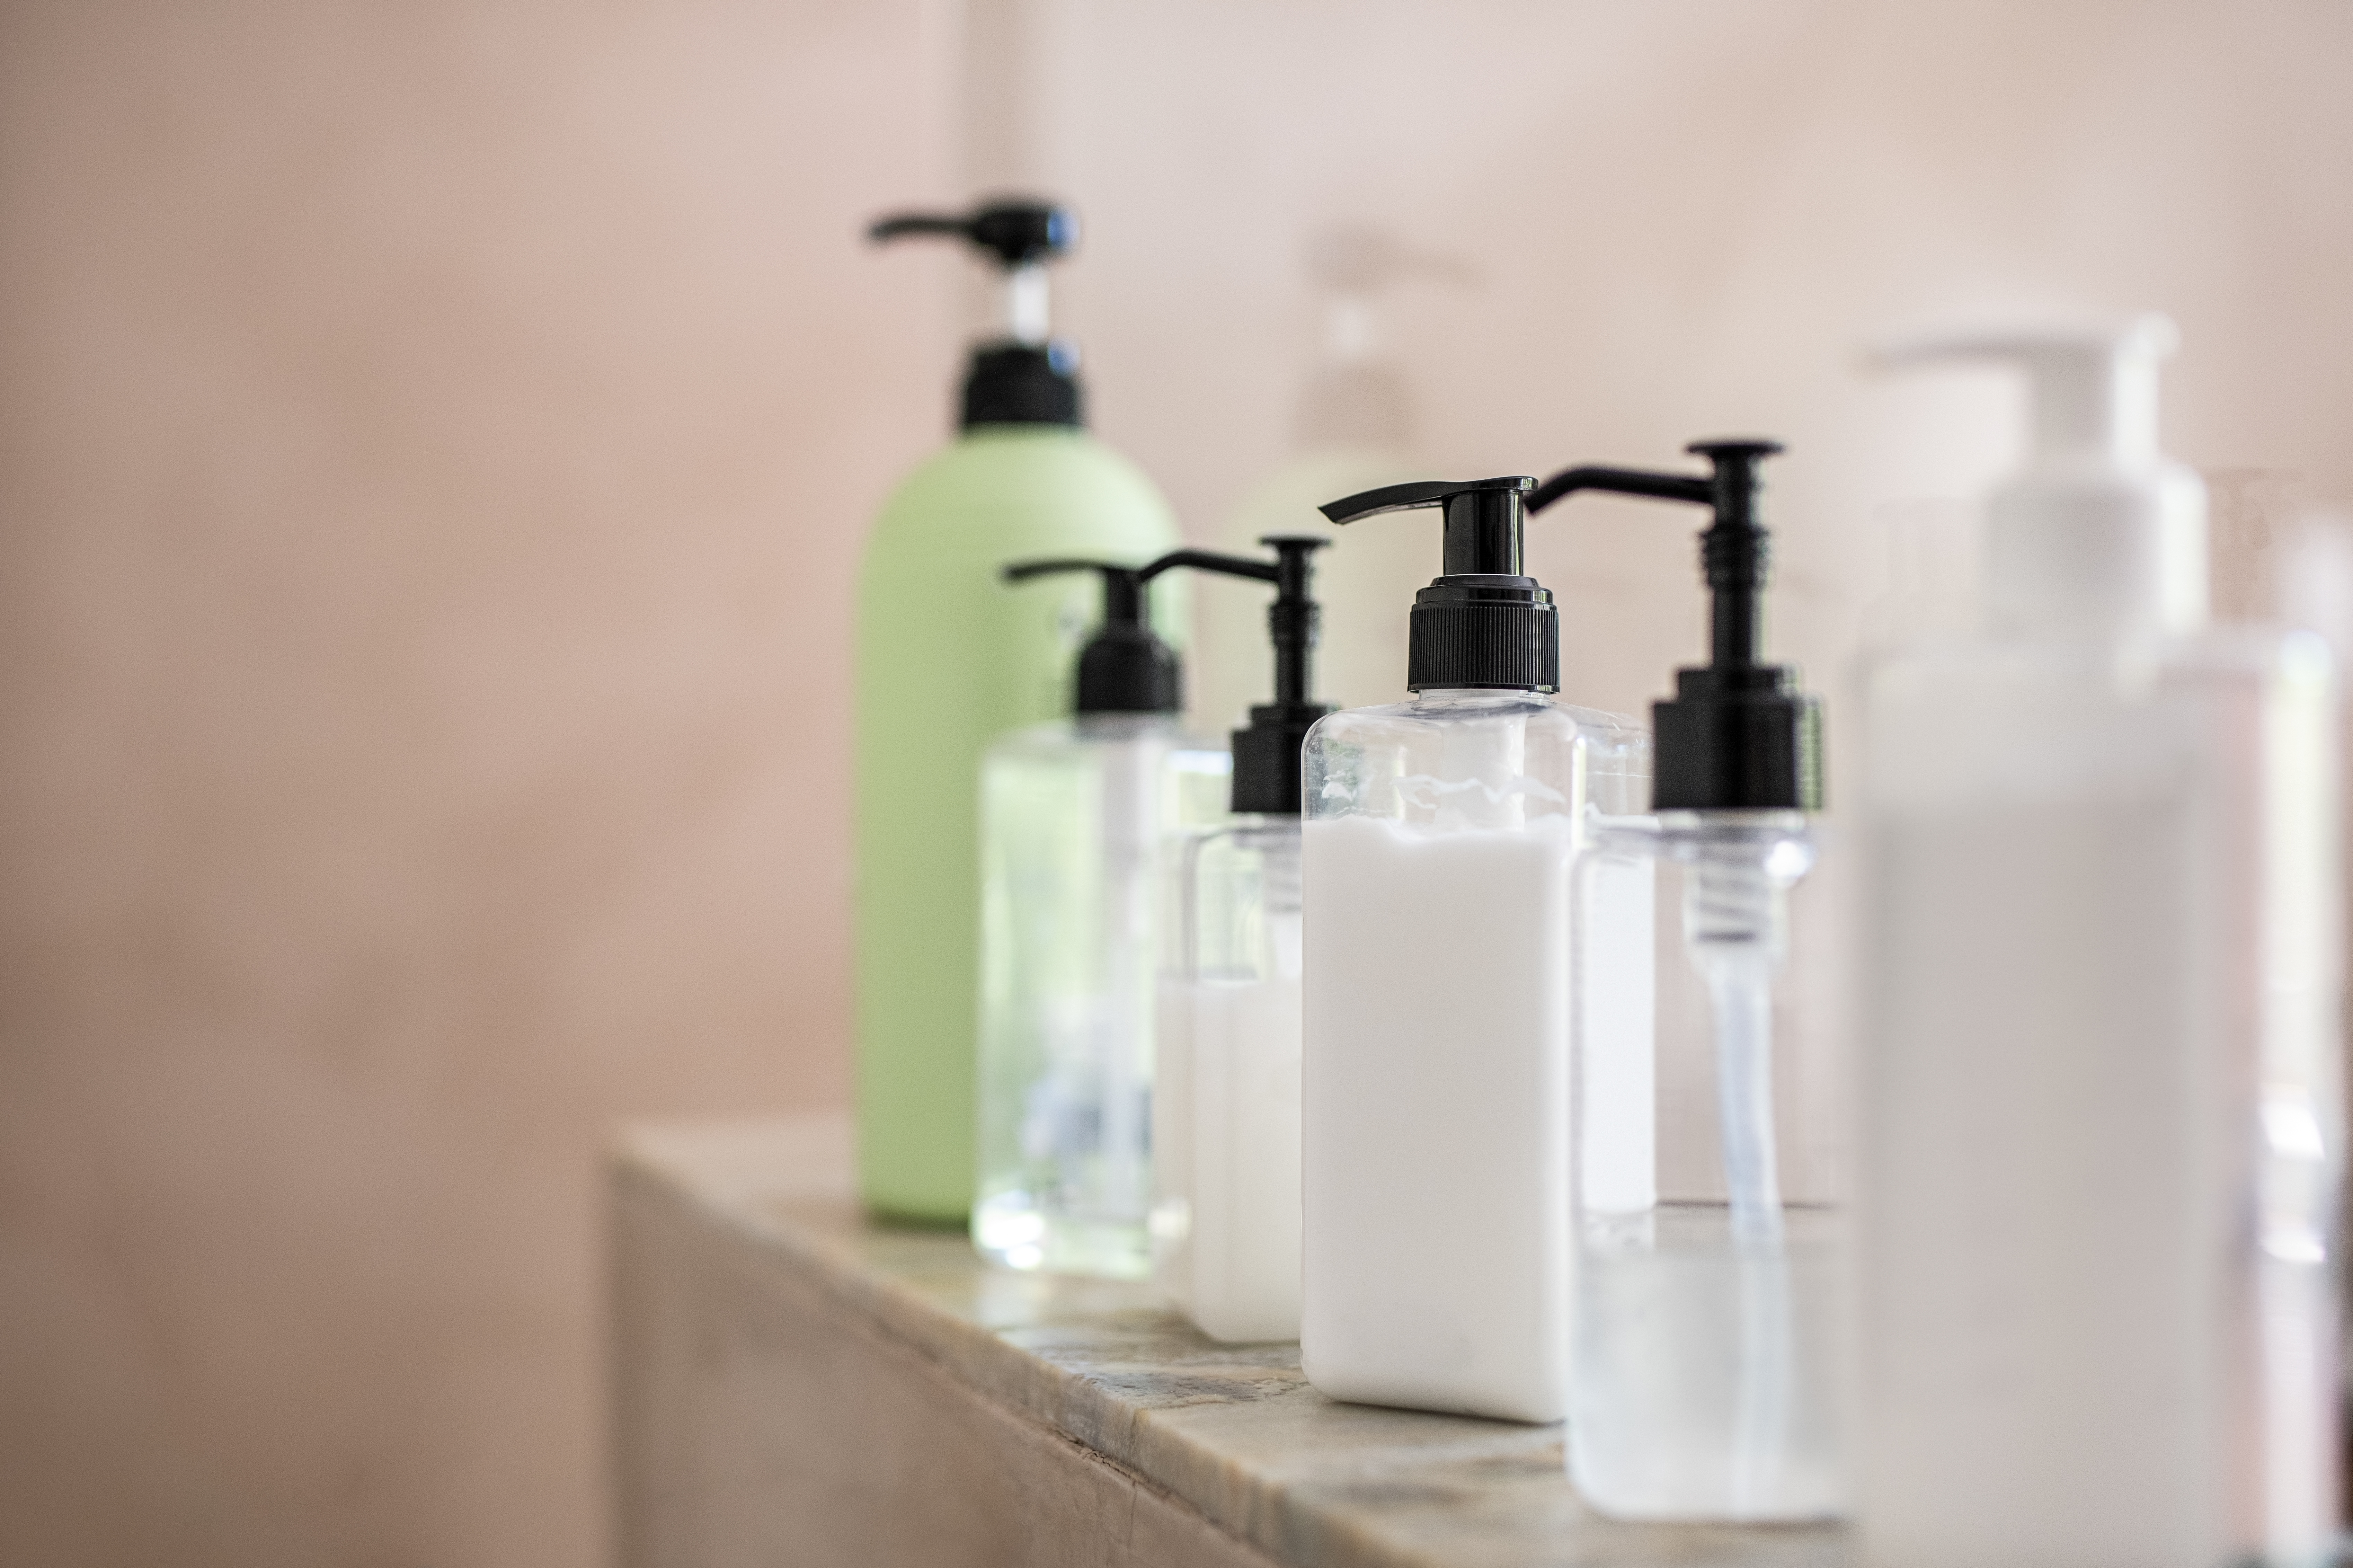 Shampoo bottles lined up on a shelf in a shower